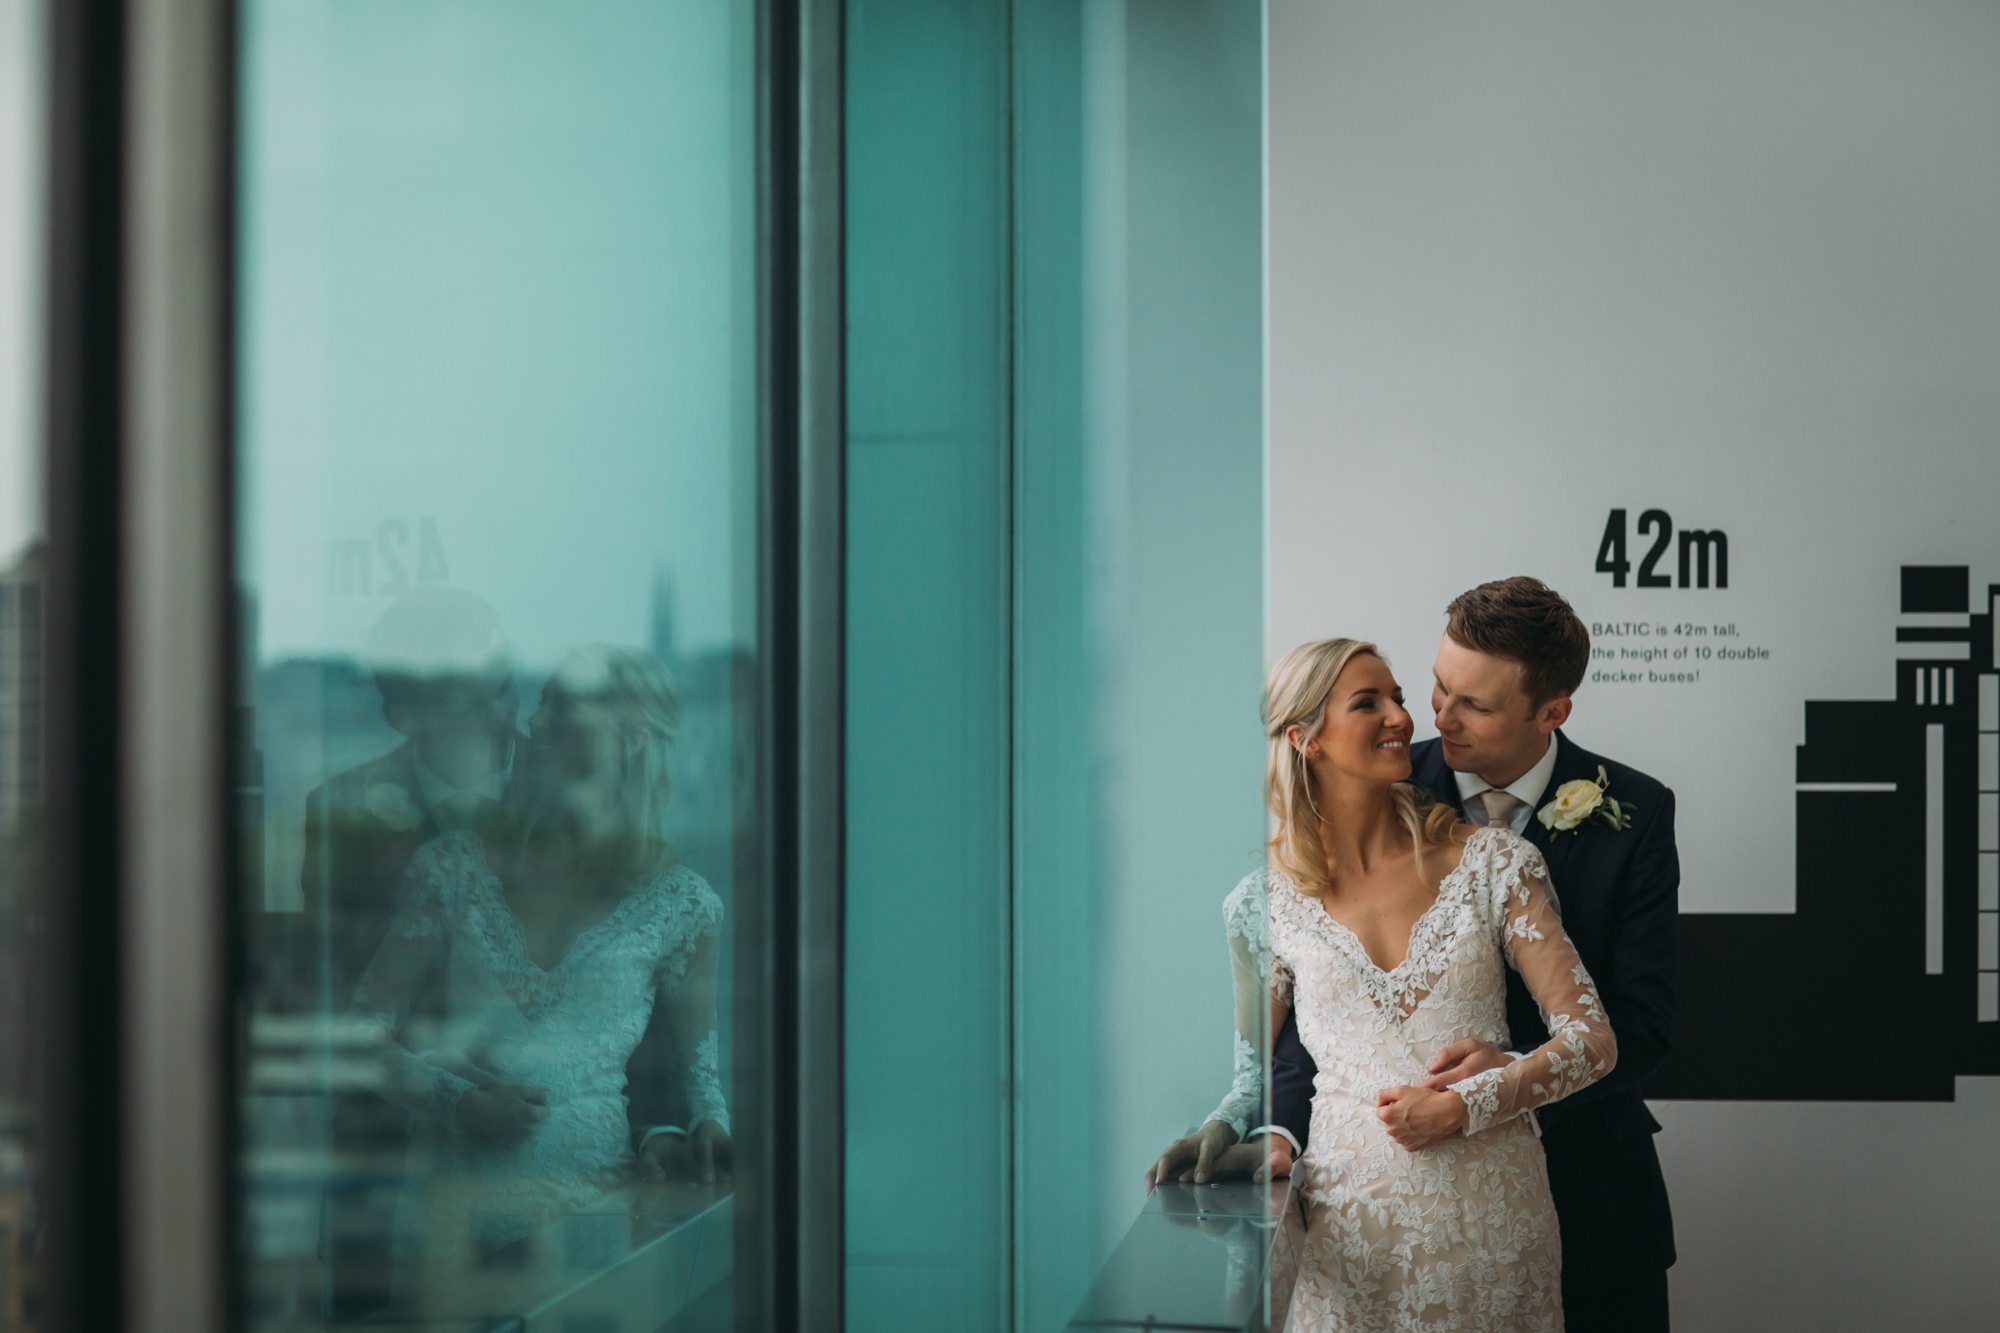 the-baltic-newcastle-wedding-romantic-jo-donaldson-photography